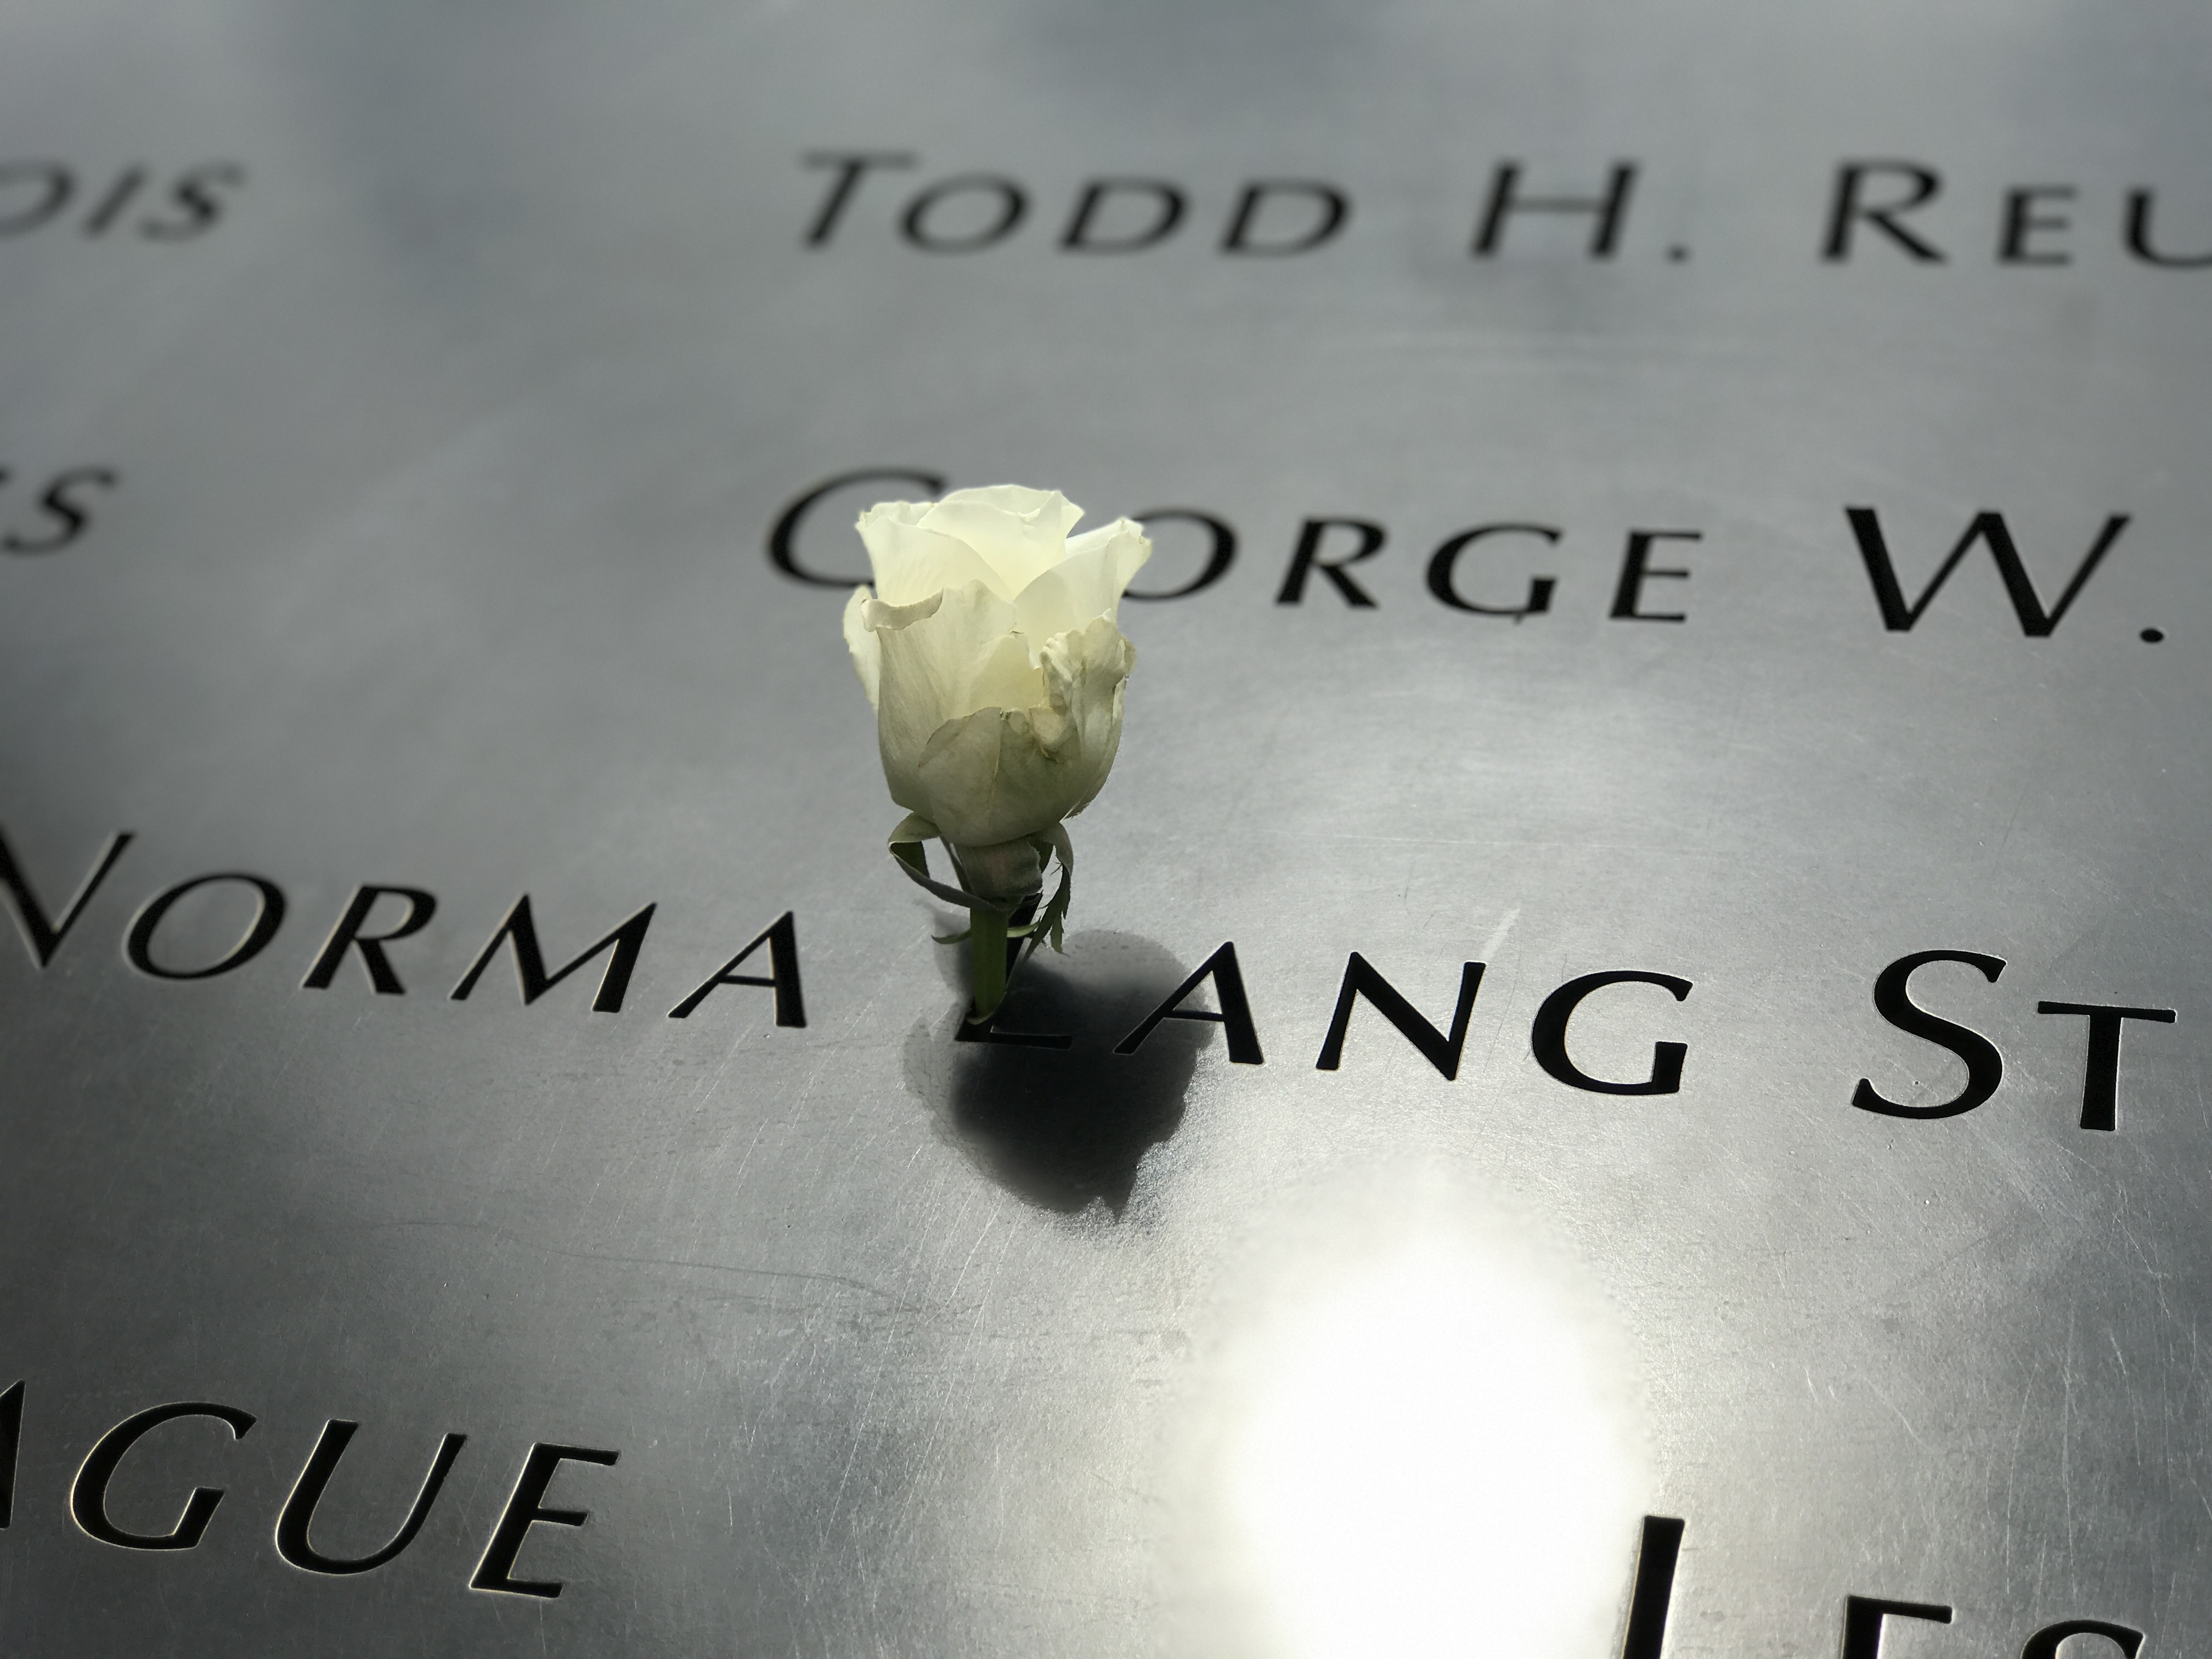 Norma Lang Steuerle 911 Memorial